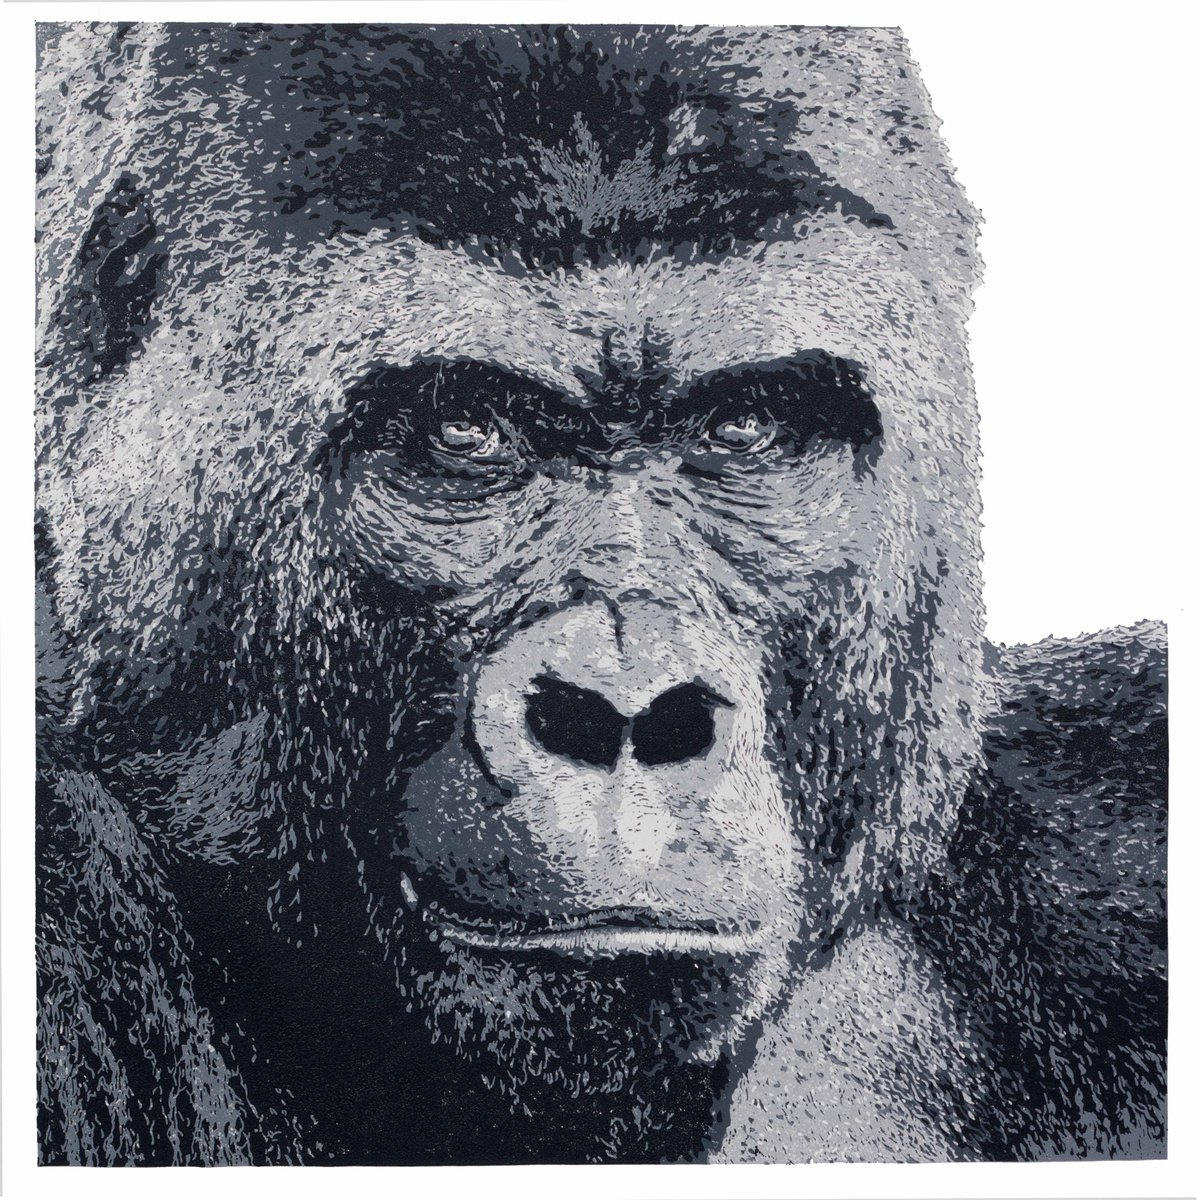 Gorilla by Wayne Longhurst